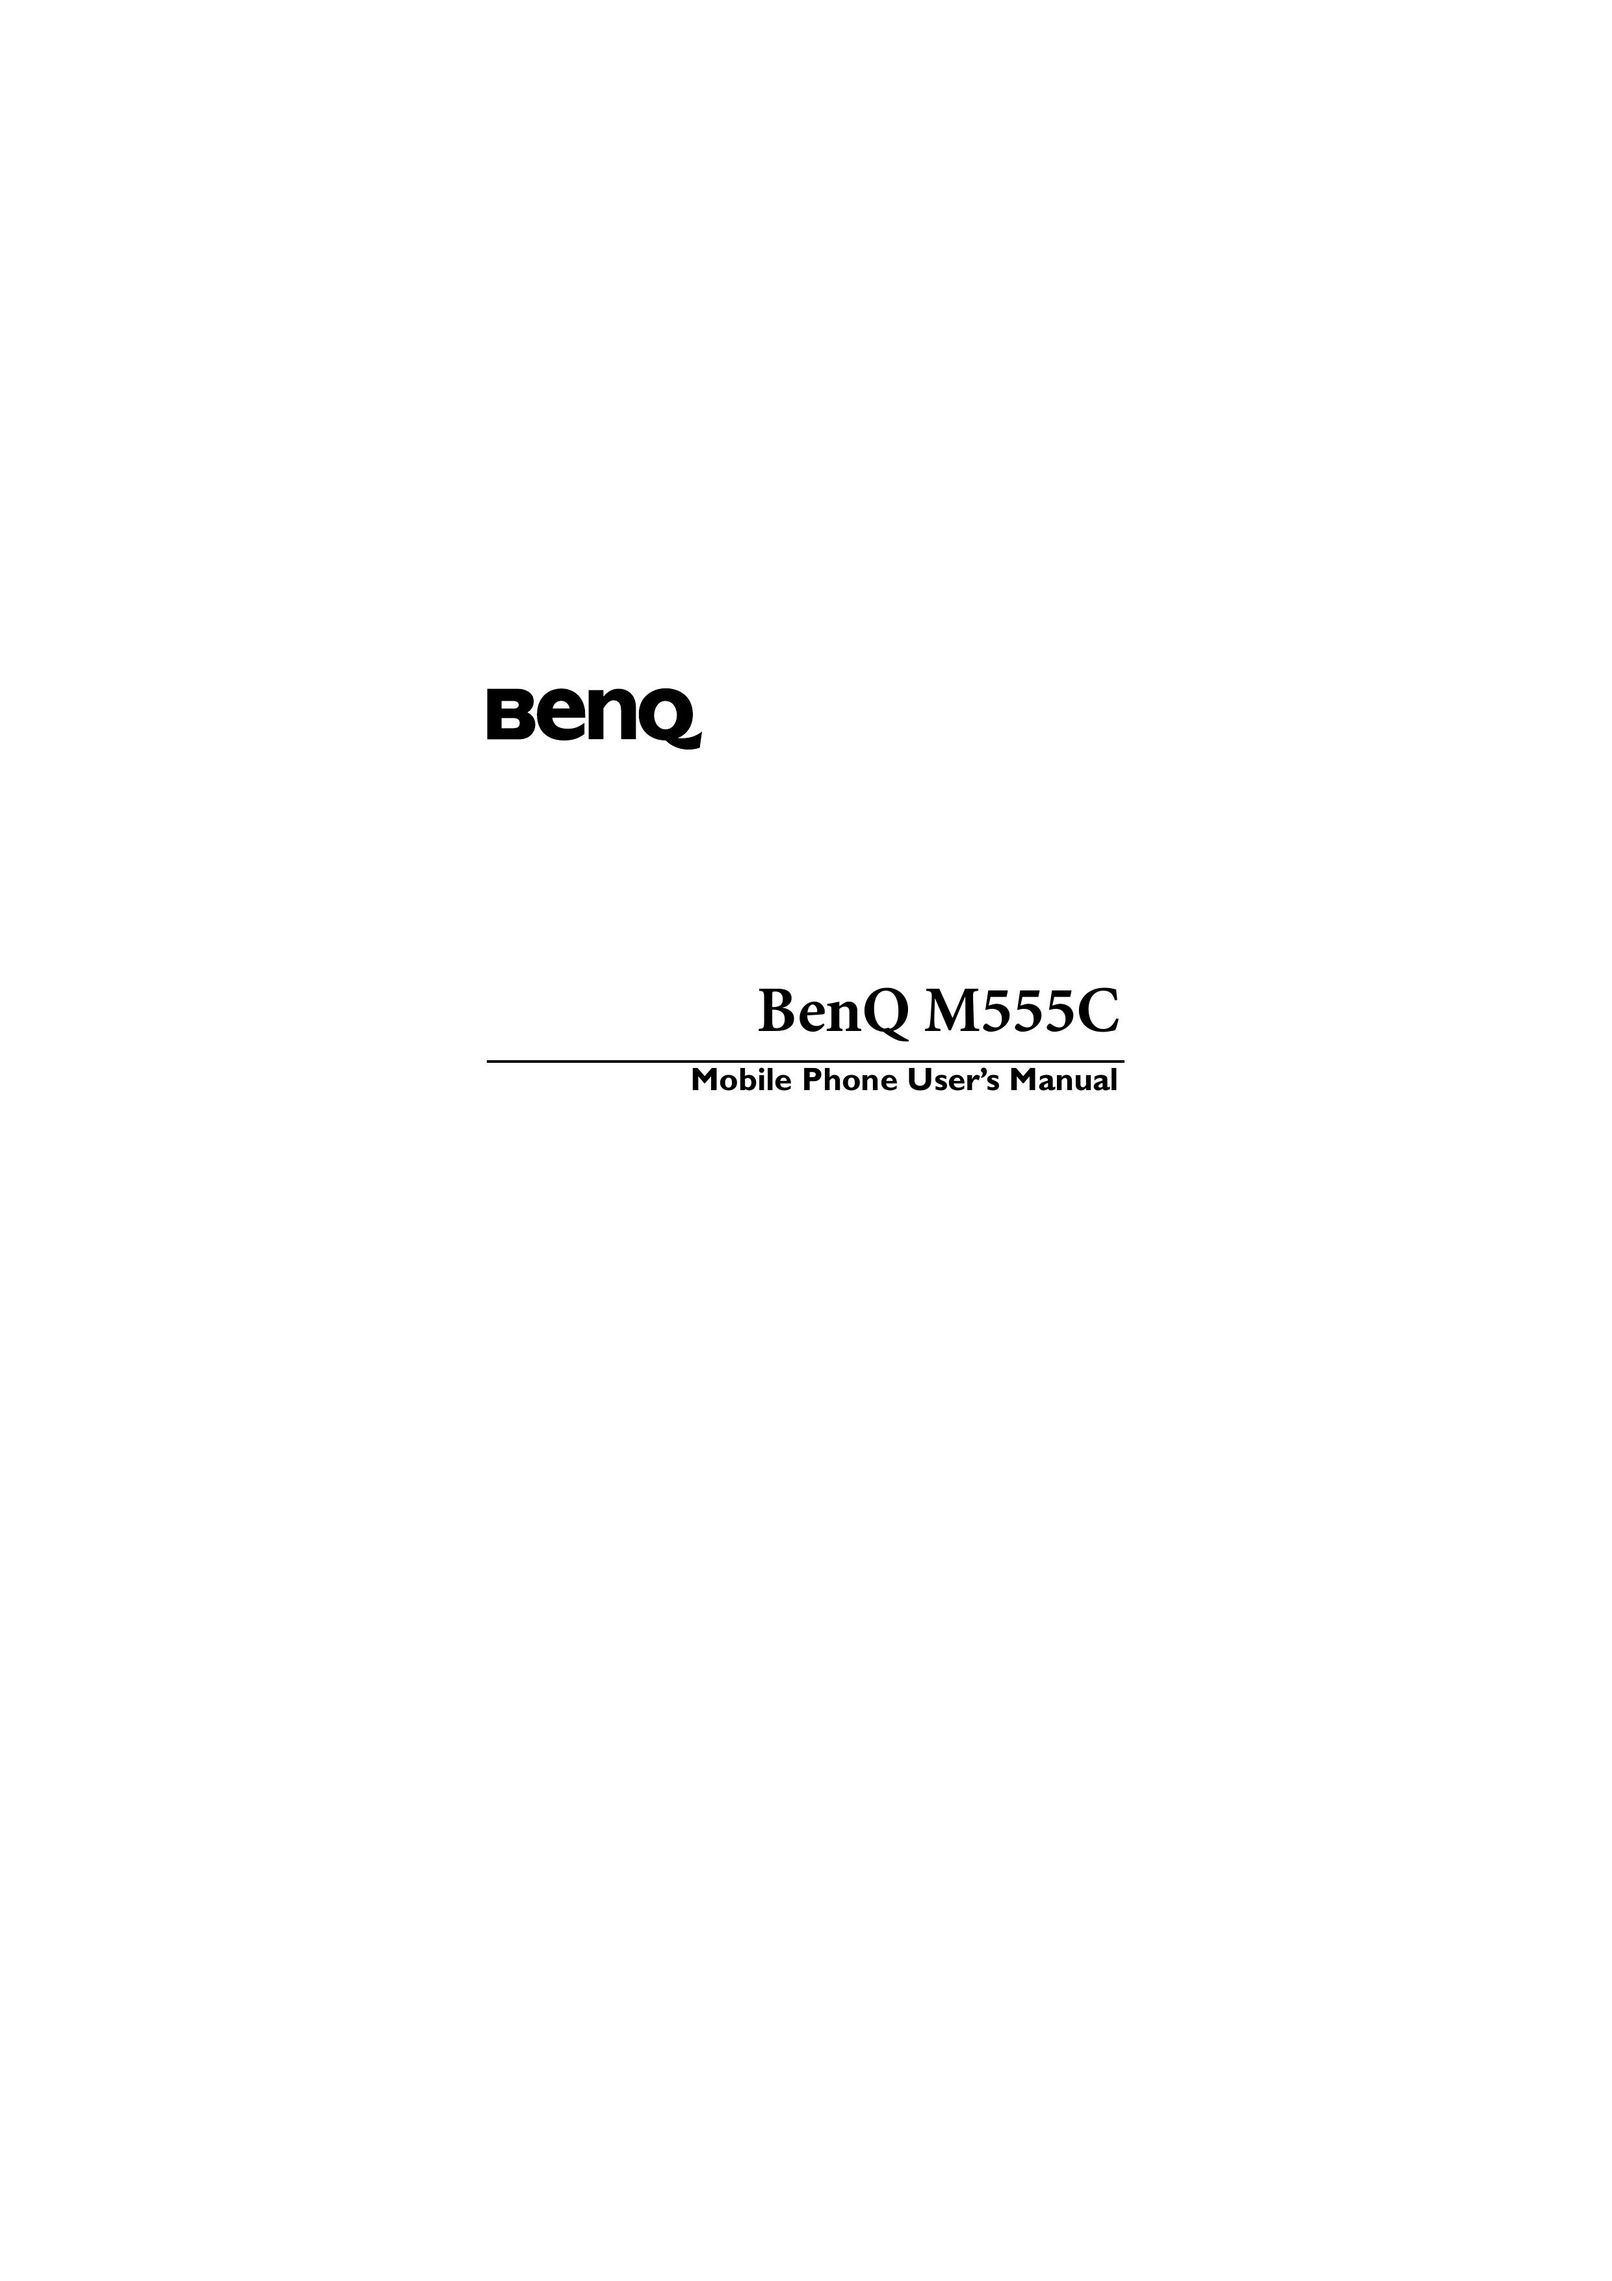 BenQ M555C Cell Phone User Manual